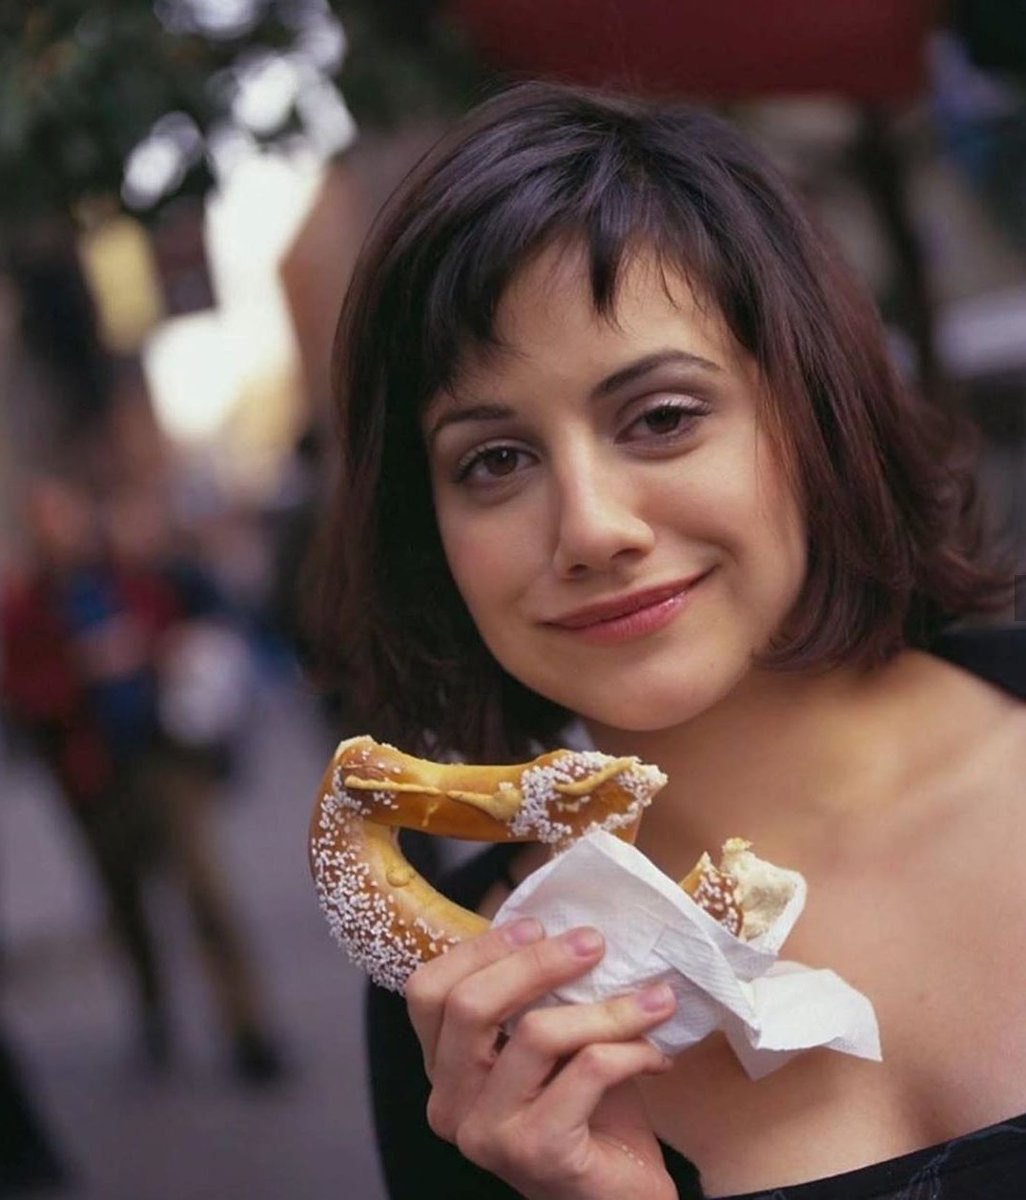 brittany murphy eating a pretzel, 1998.